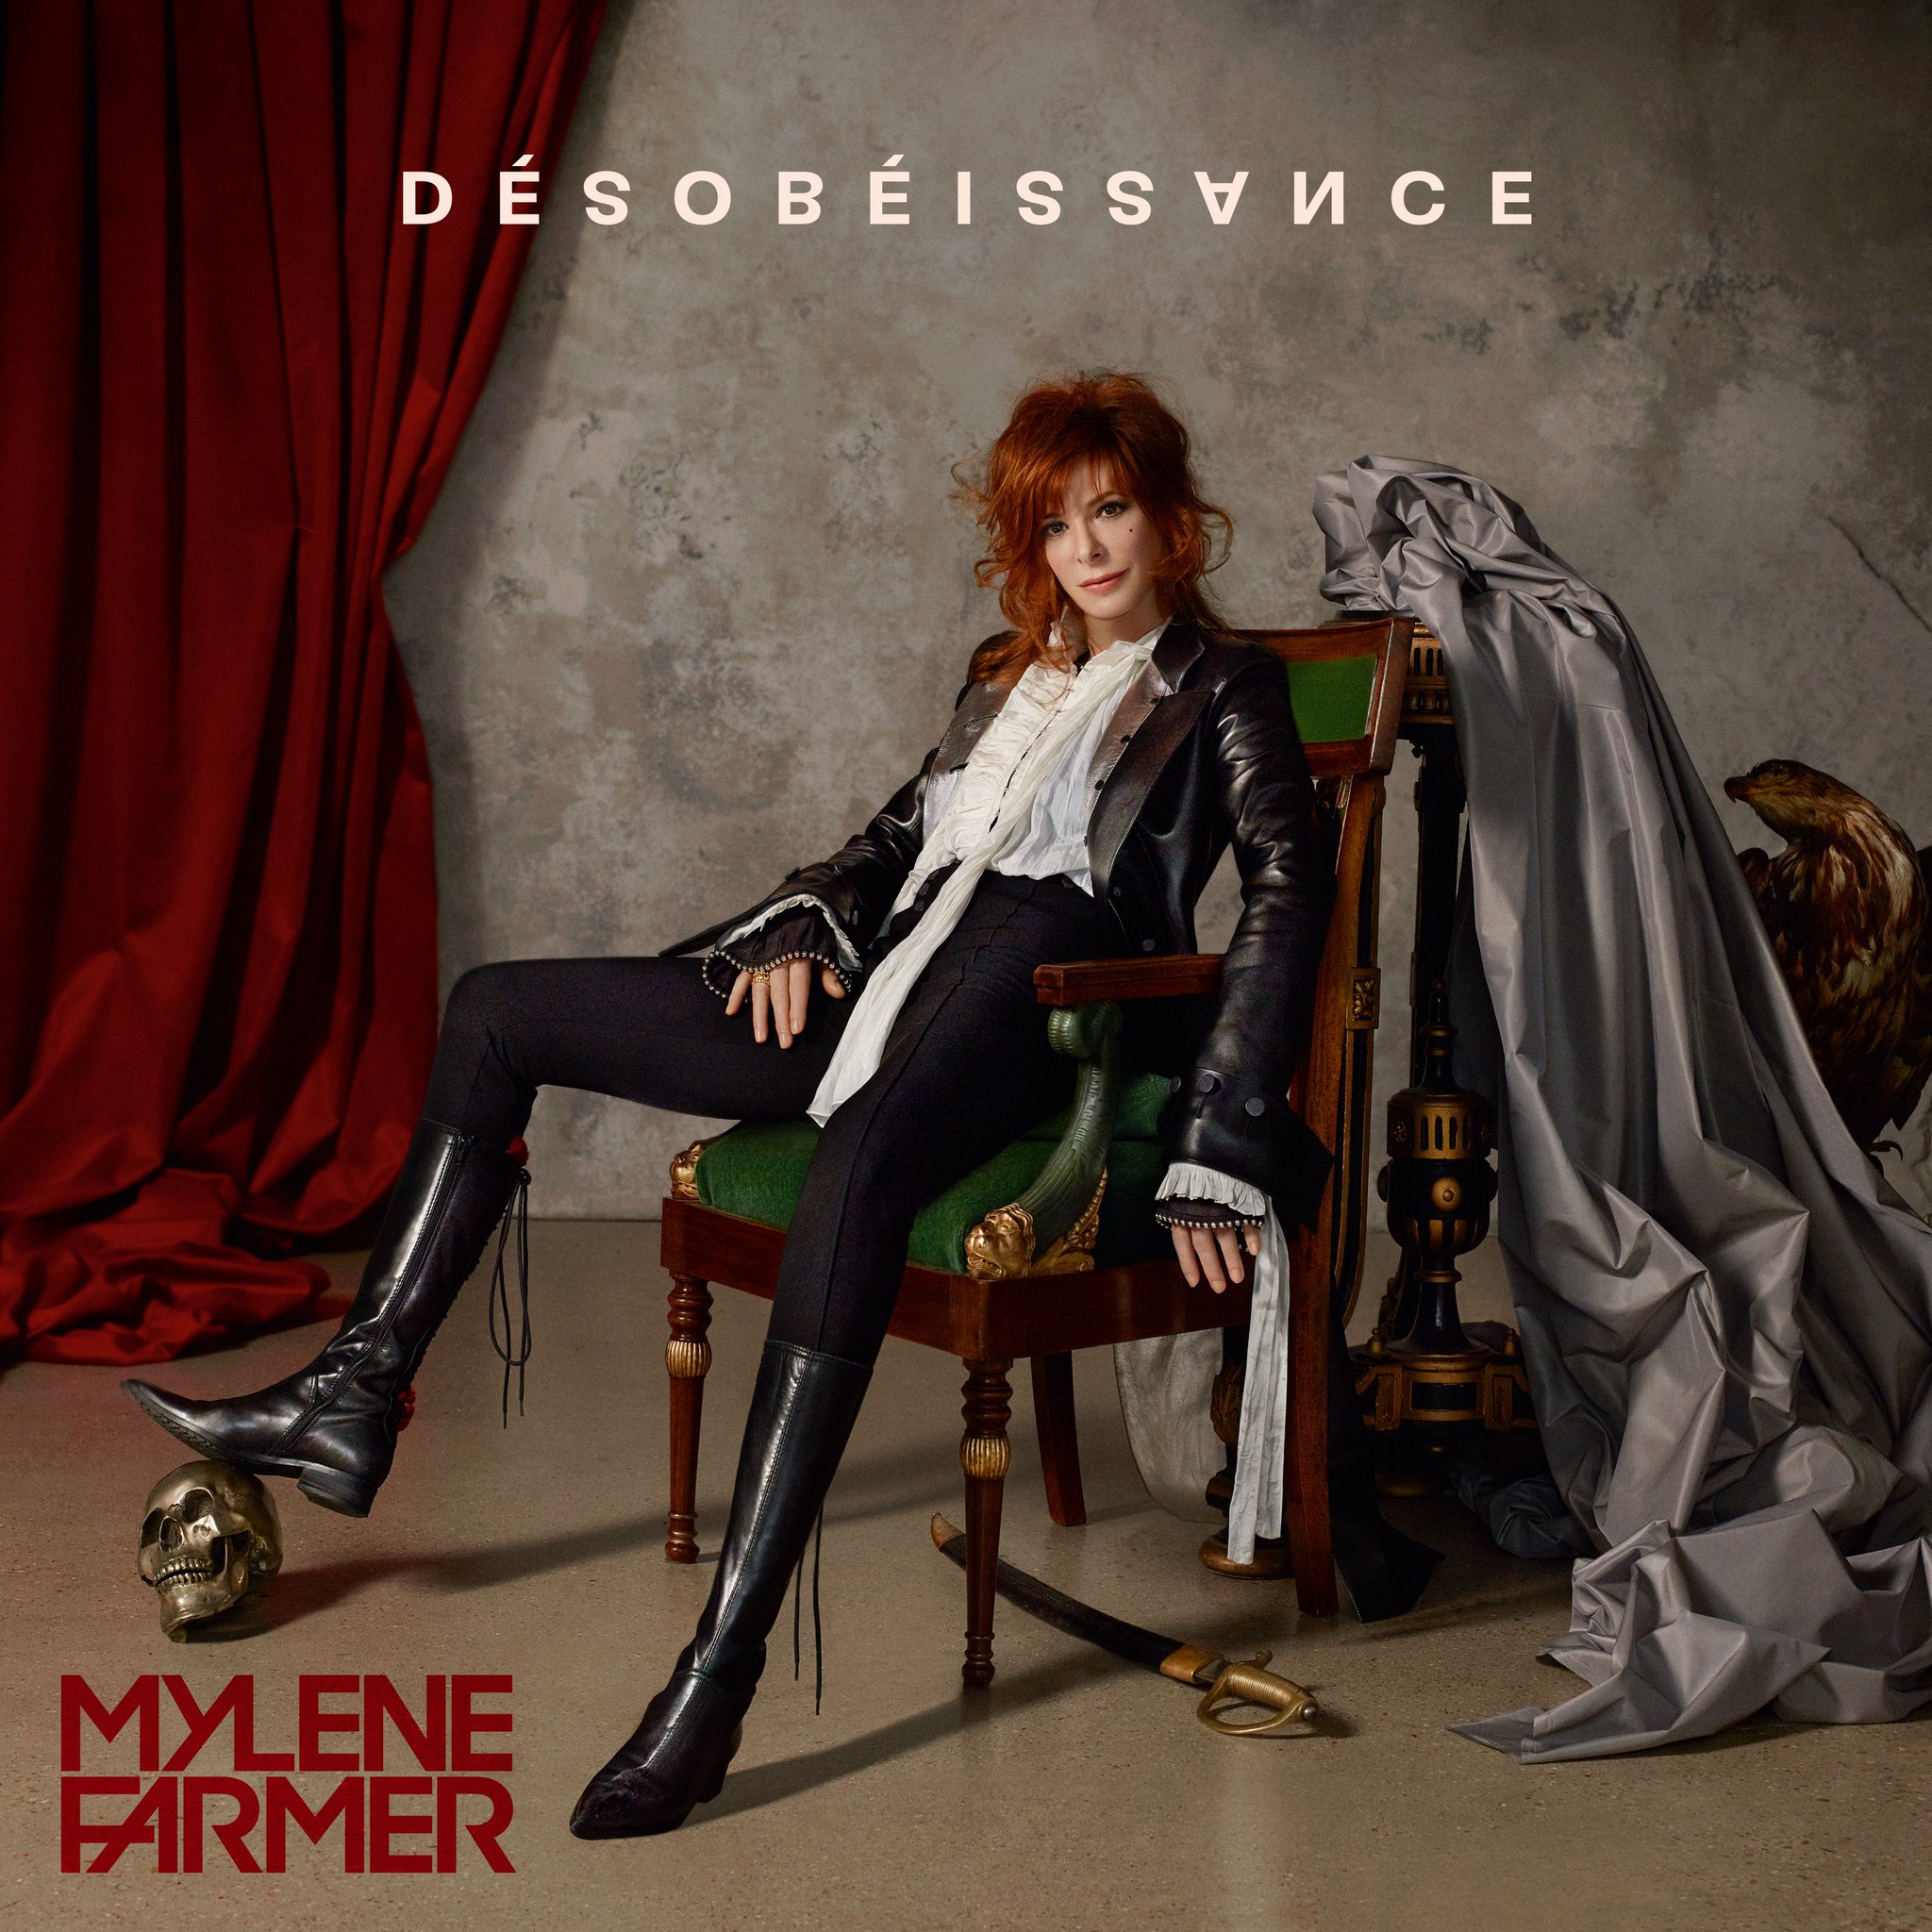 Mylene Farmer - Desobeissance (2018) Album Info